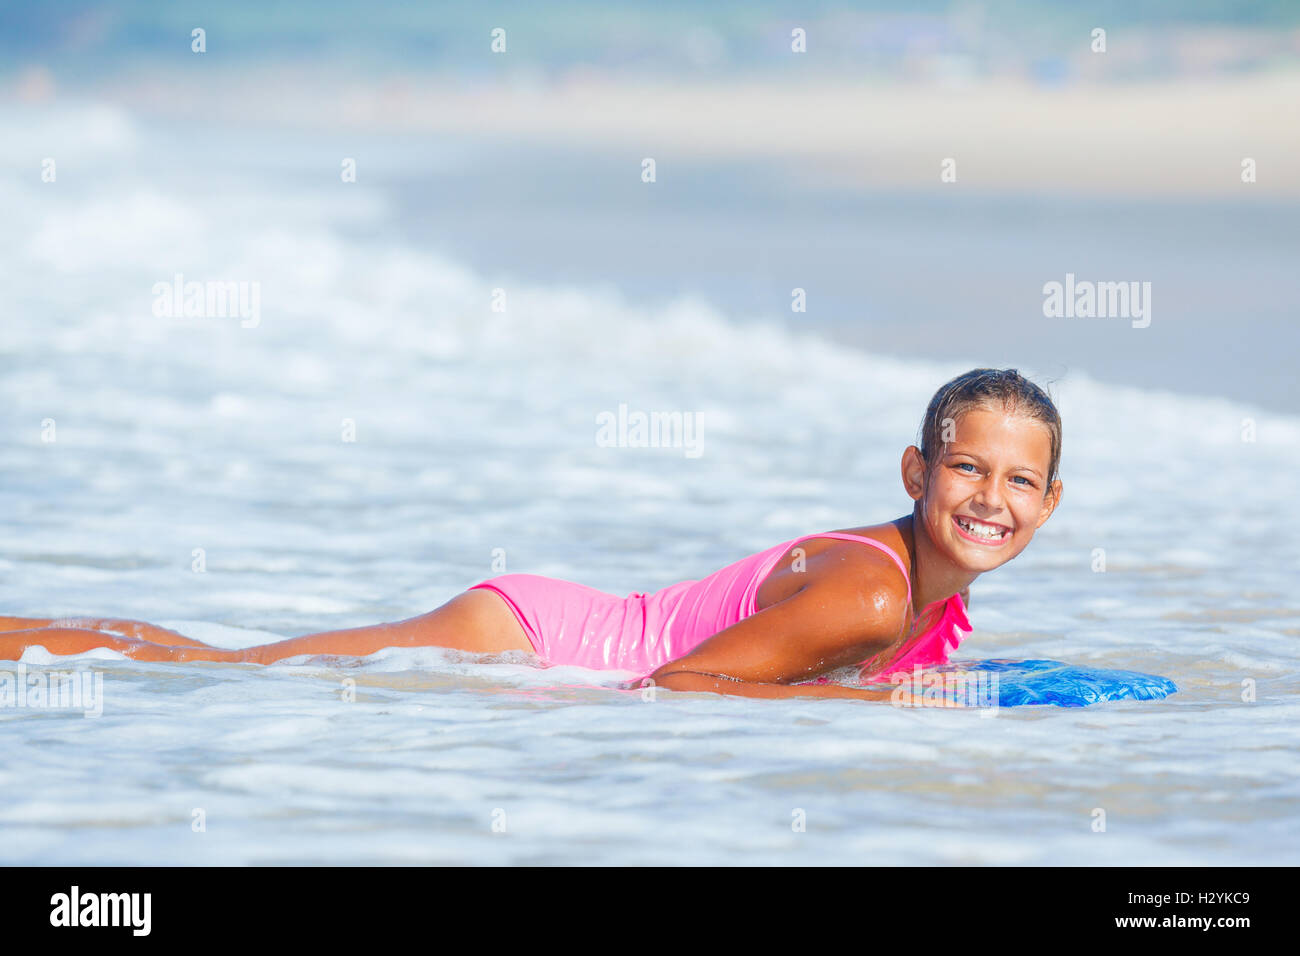 Summer vacation - surfer girl. Stock Photo